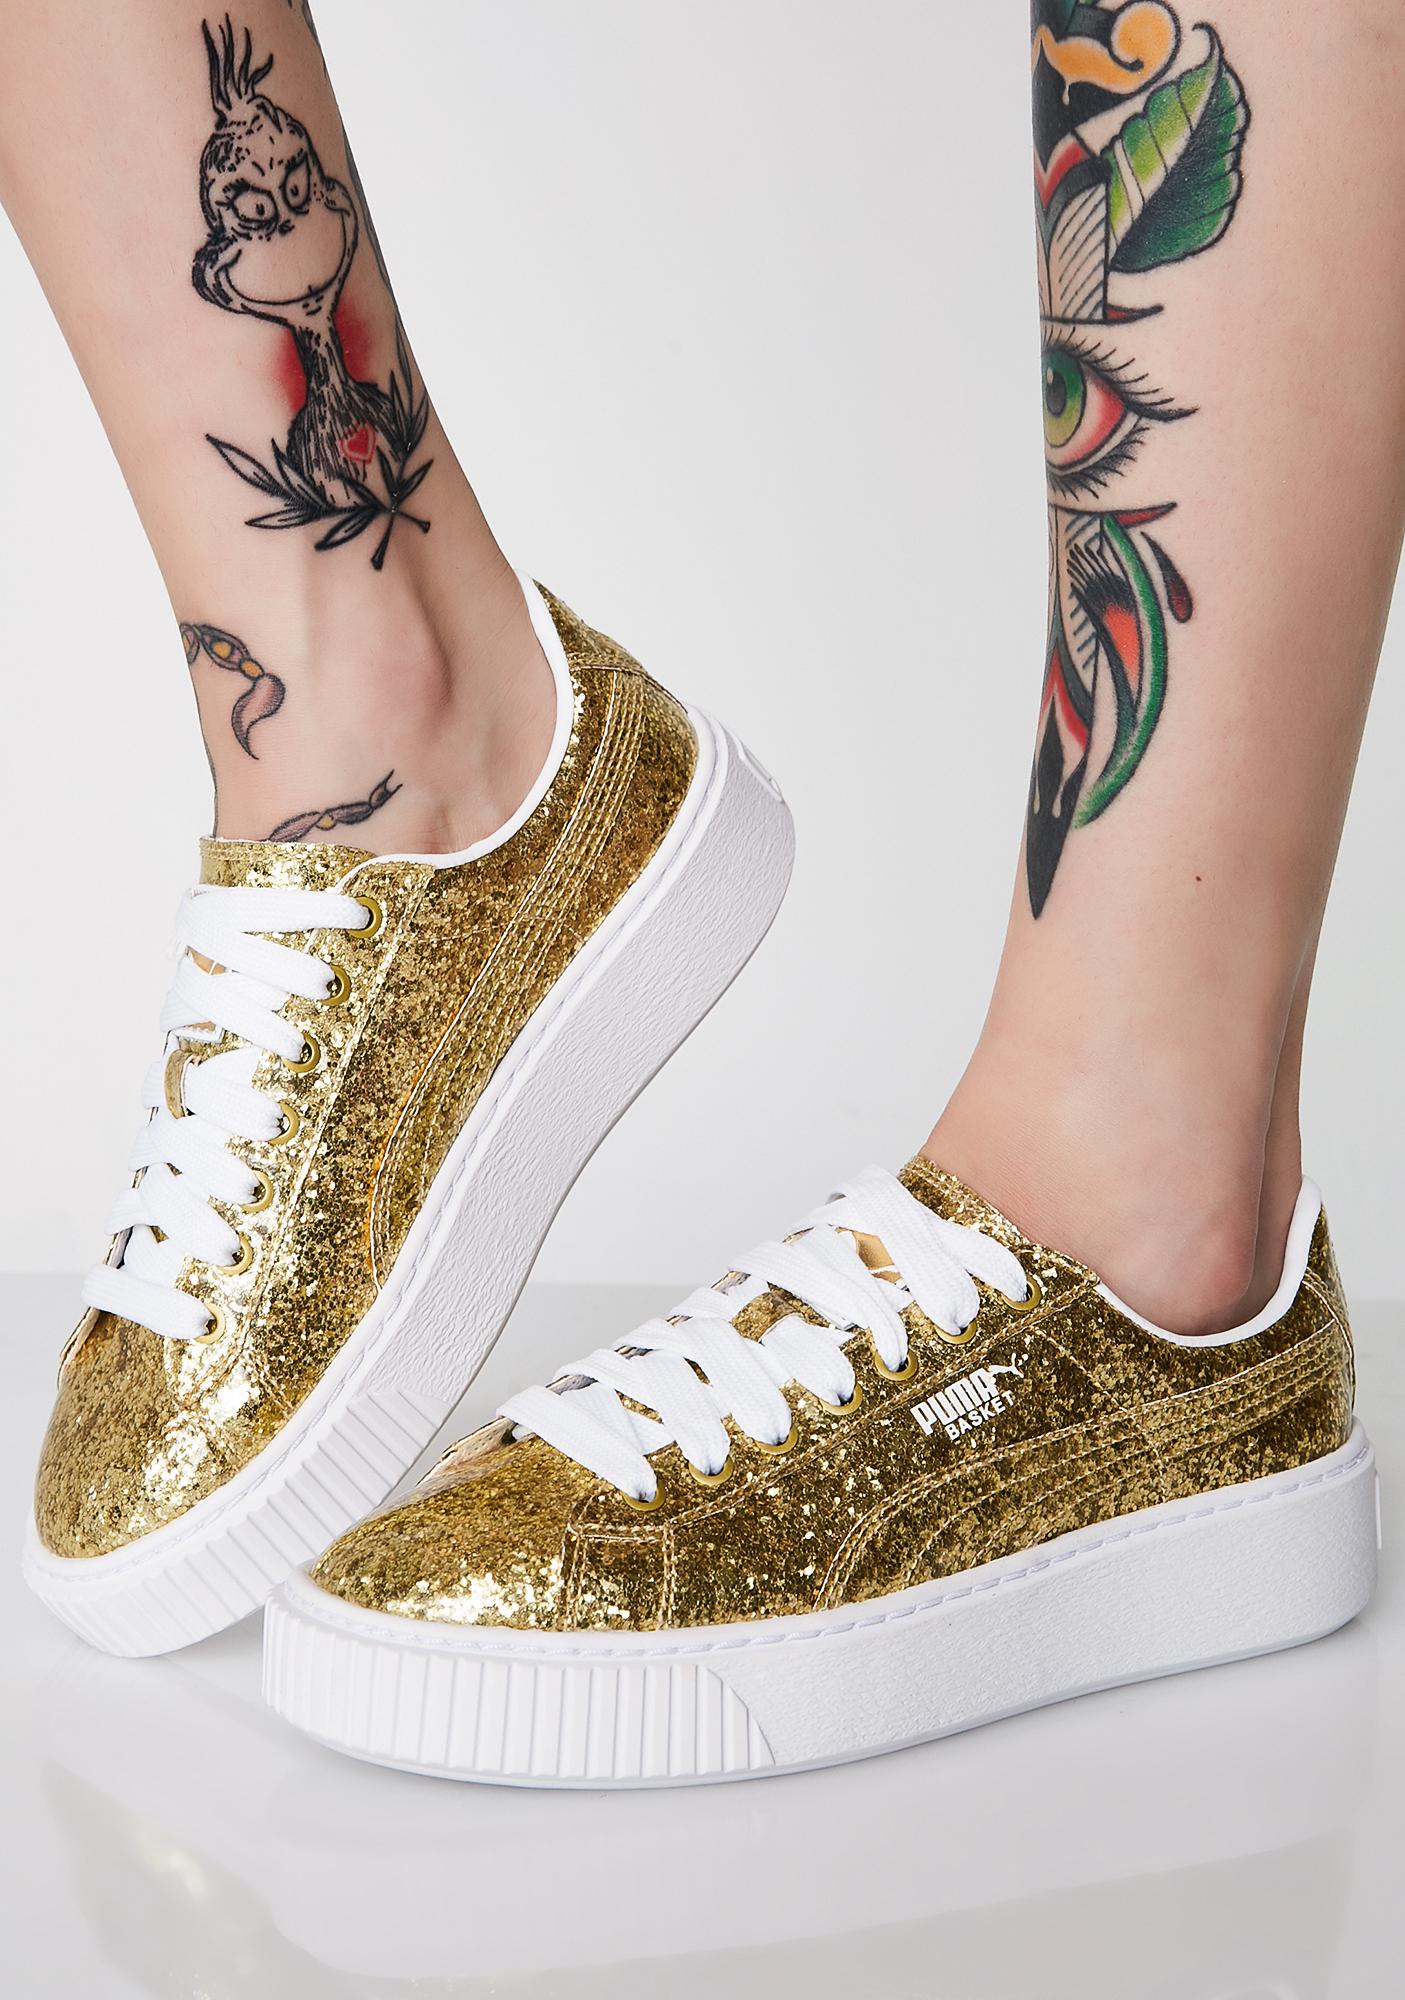 puma gold glitter shoes